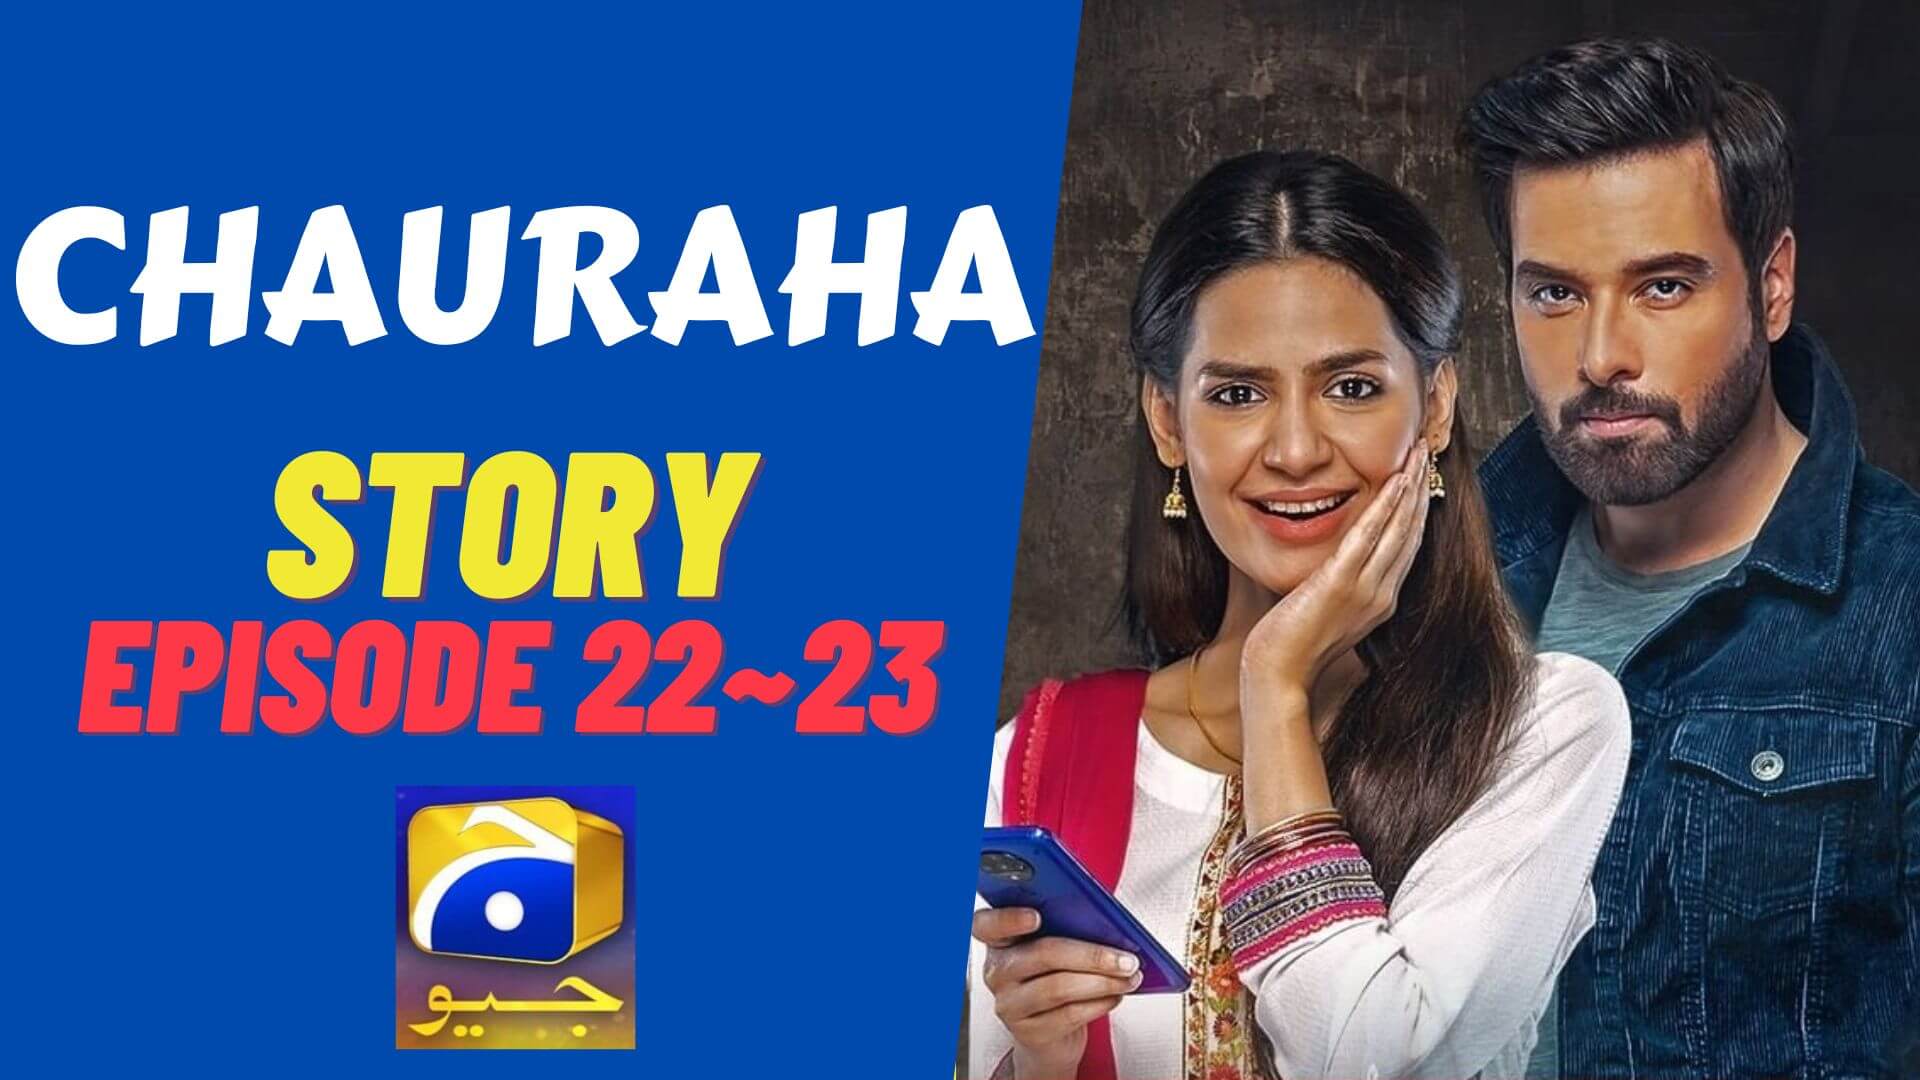 Chauraha Episode 22_23 Story